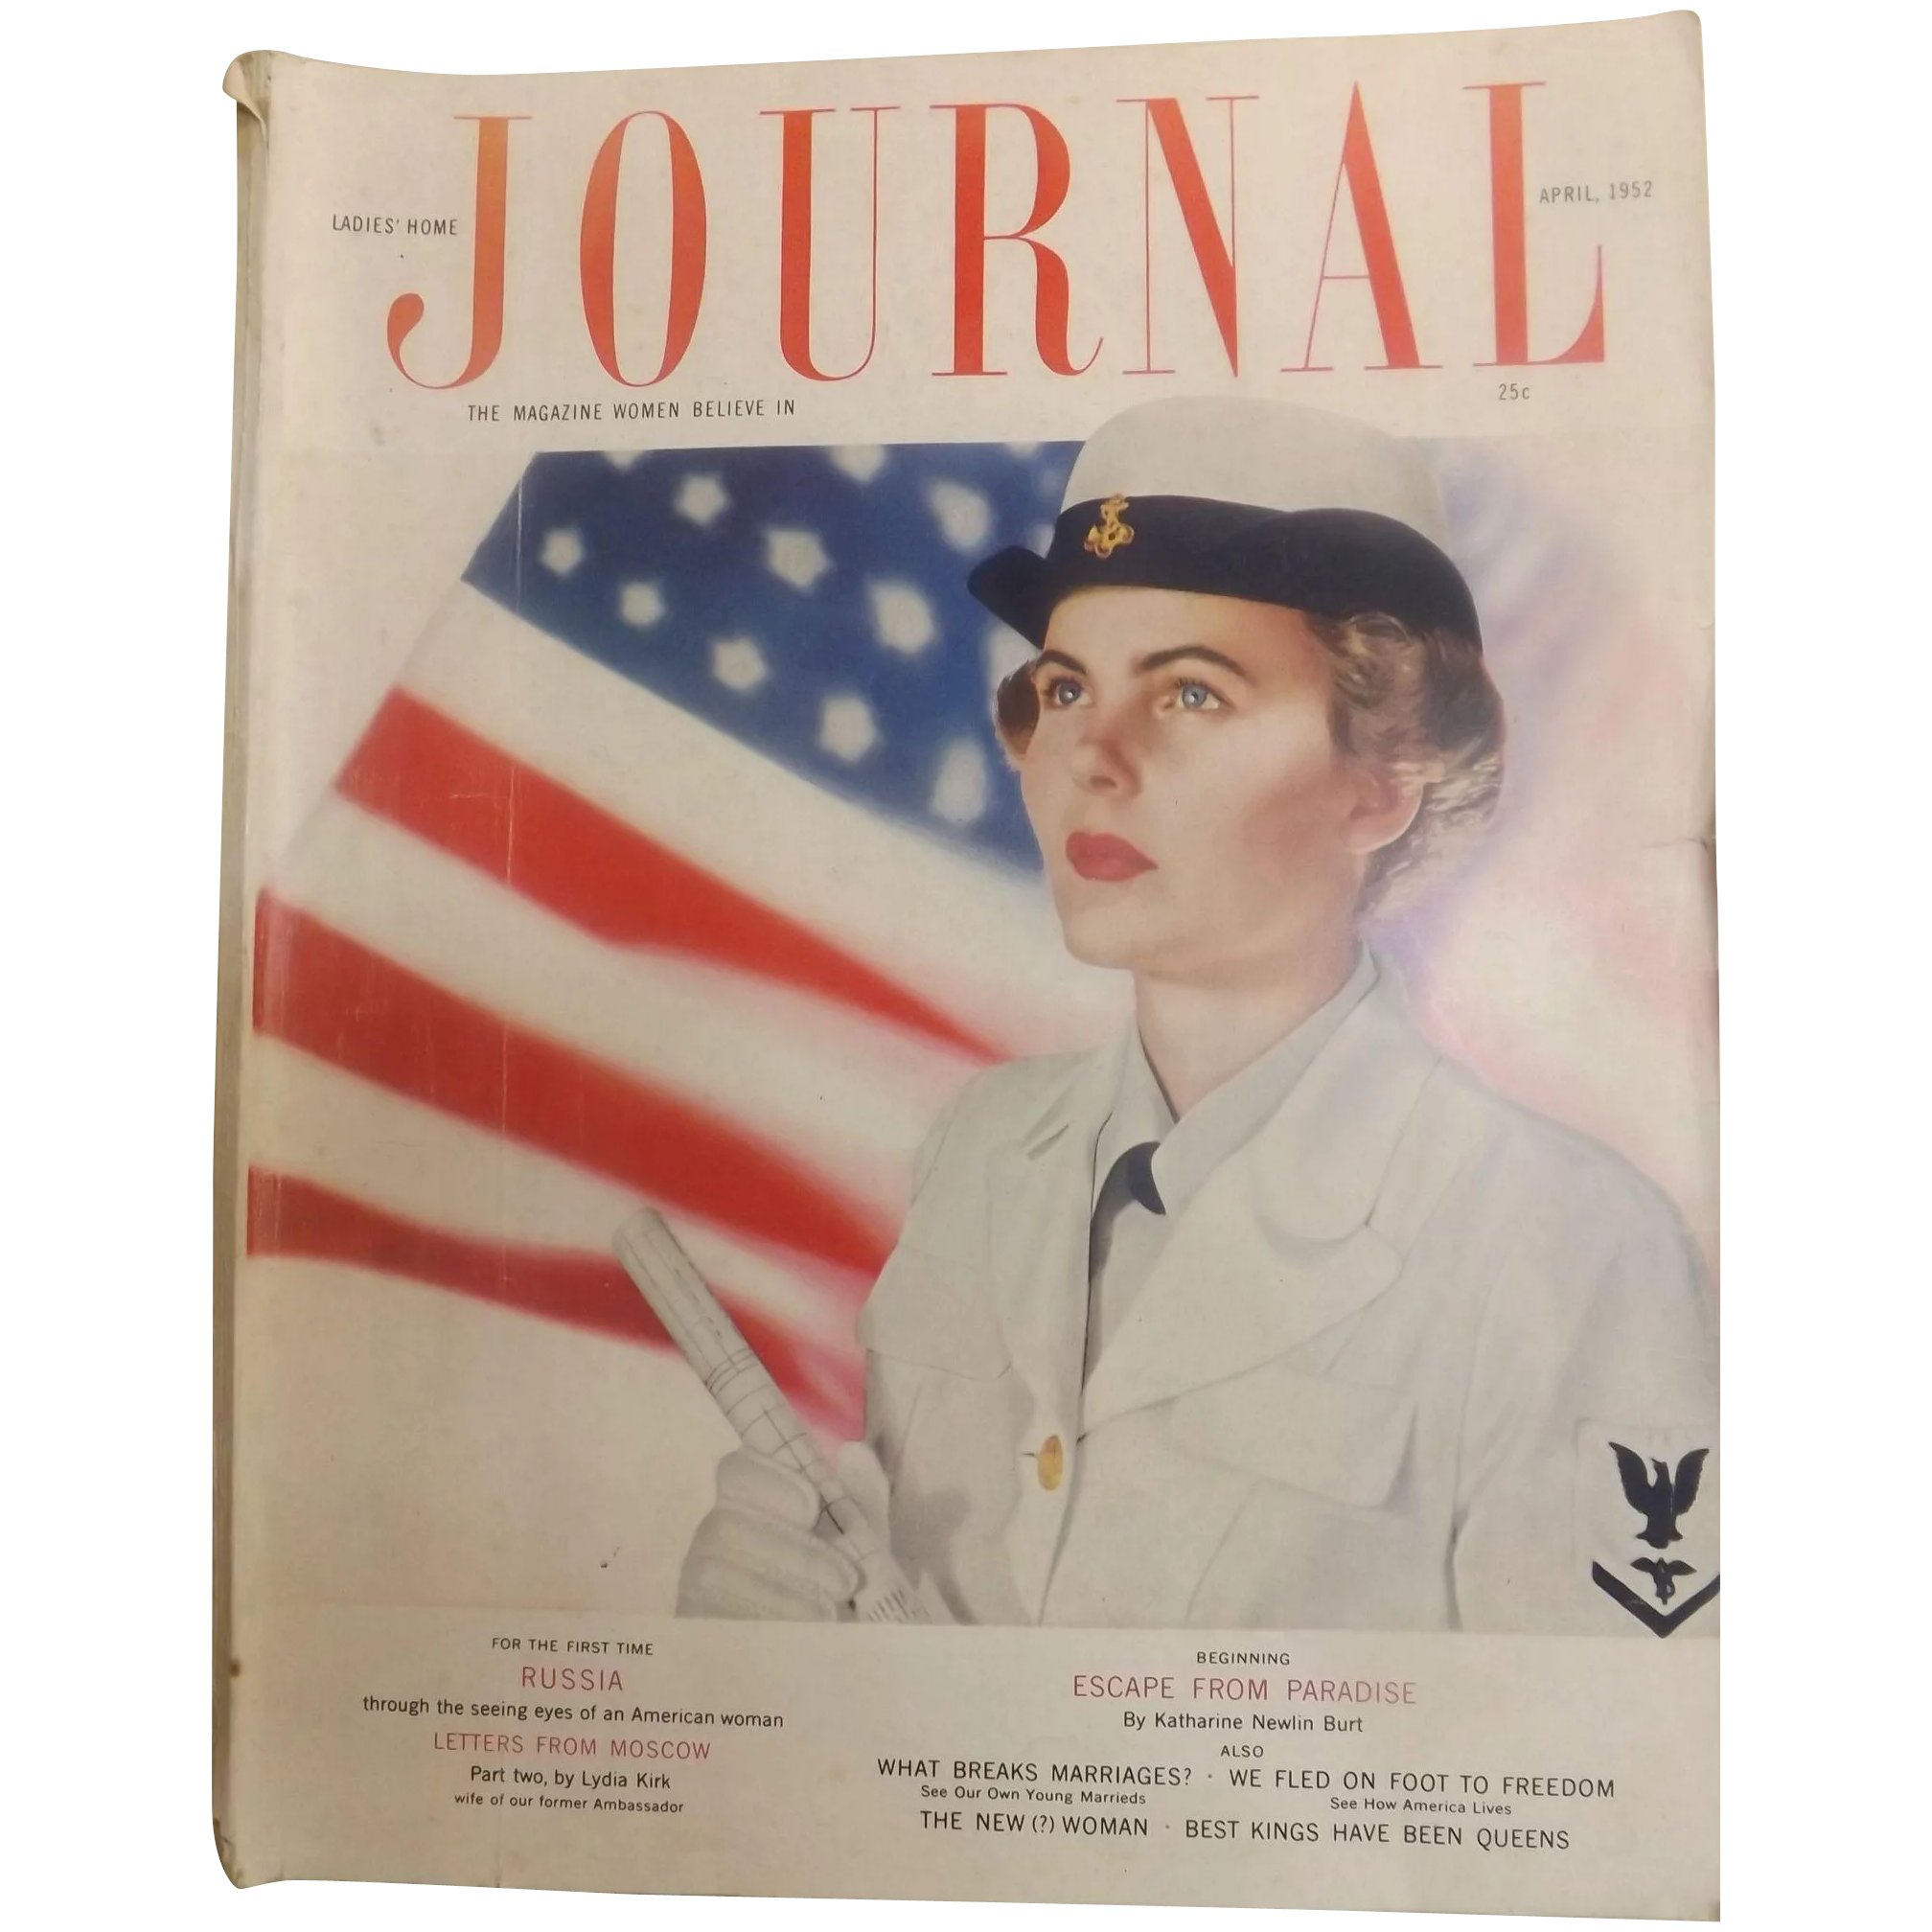 Ladies Home Journal Magazine - April 1952 USA